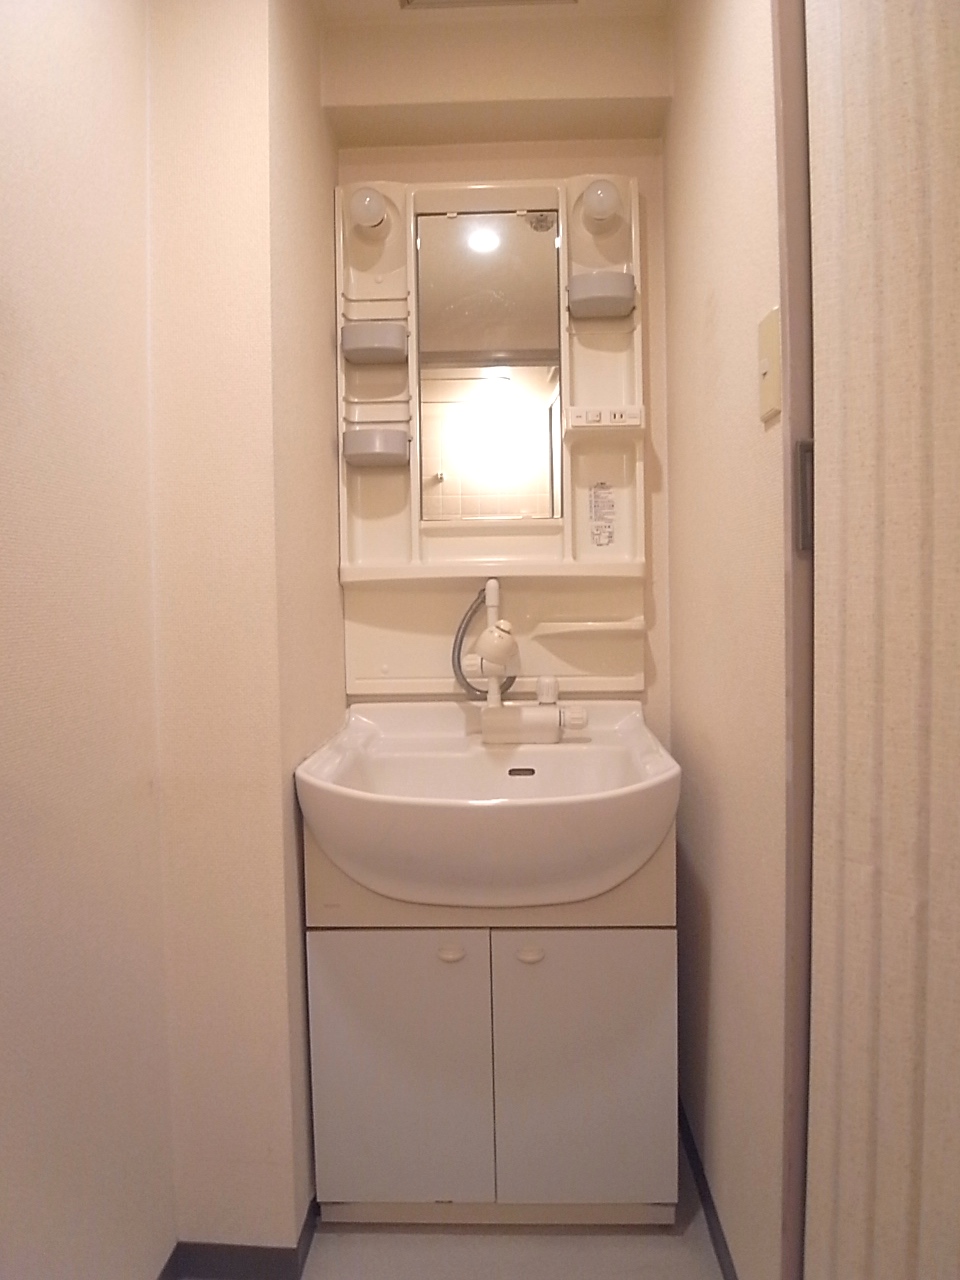 Washroom. Shower dresser washbasin